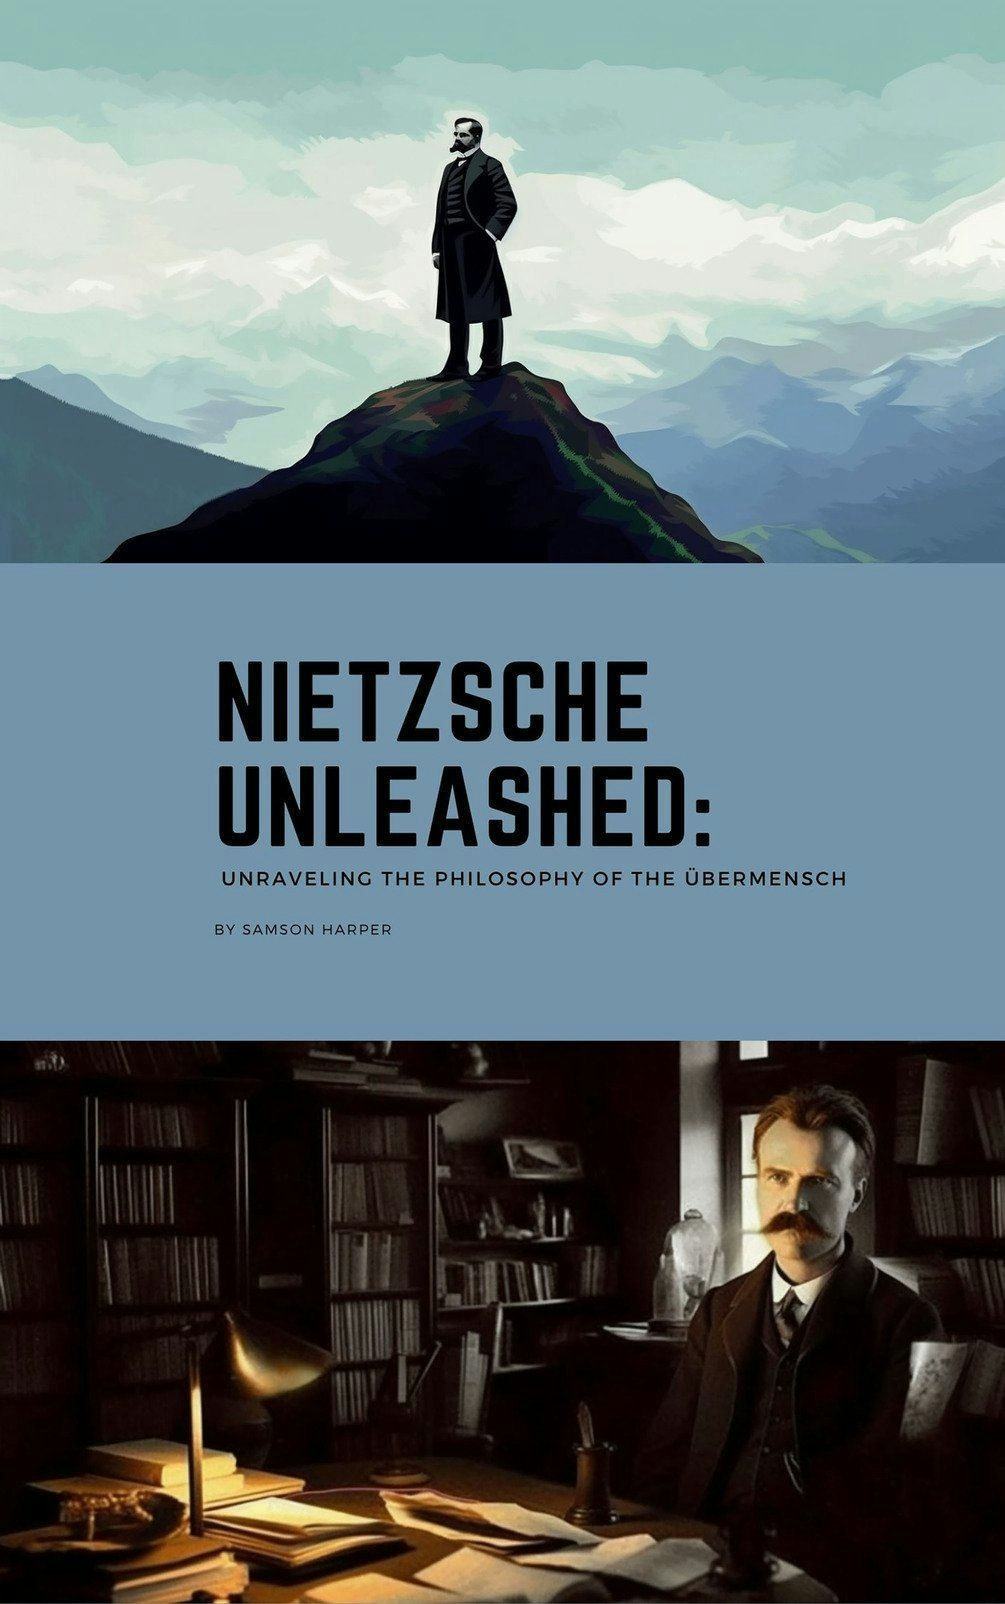 Nietzsche Unleashed: Unraveling the Philosophy of the Übermensch